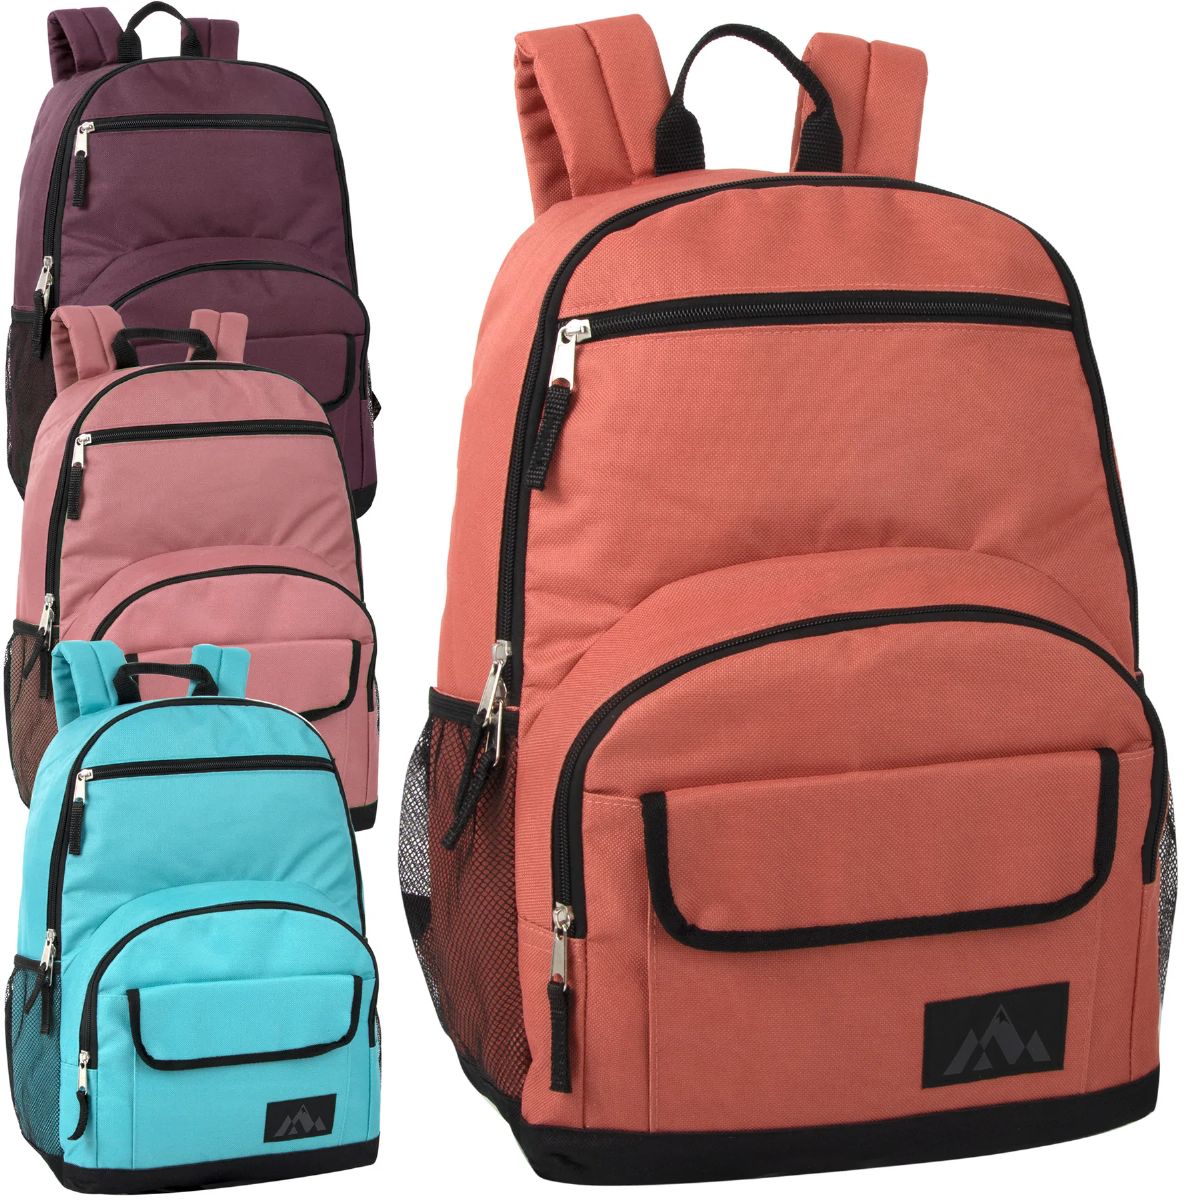 24 Pieces Multi Pocket Function Backpack - 4 Color Girls Assortment - Backpacks 18" or Larger